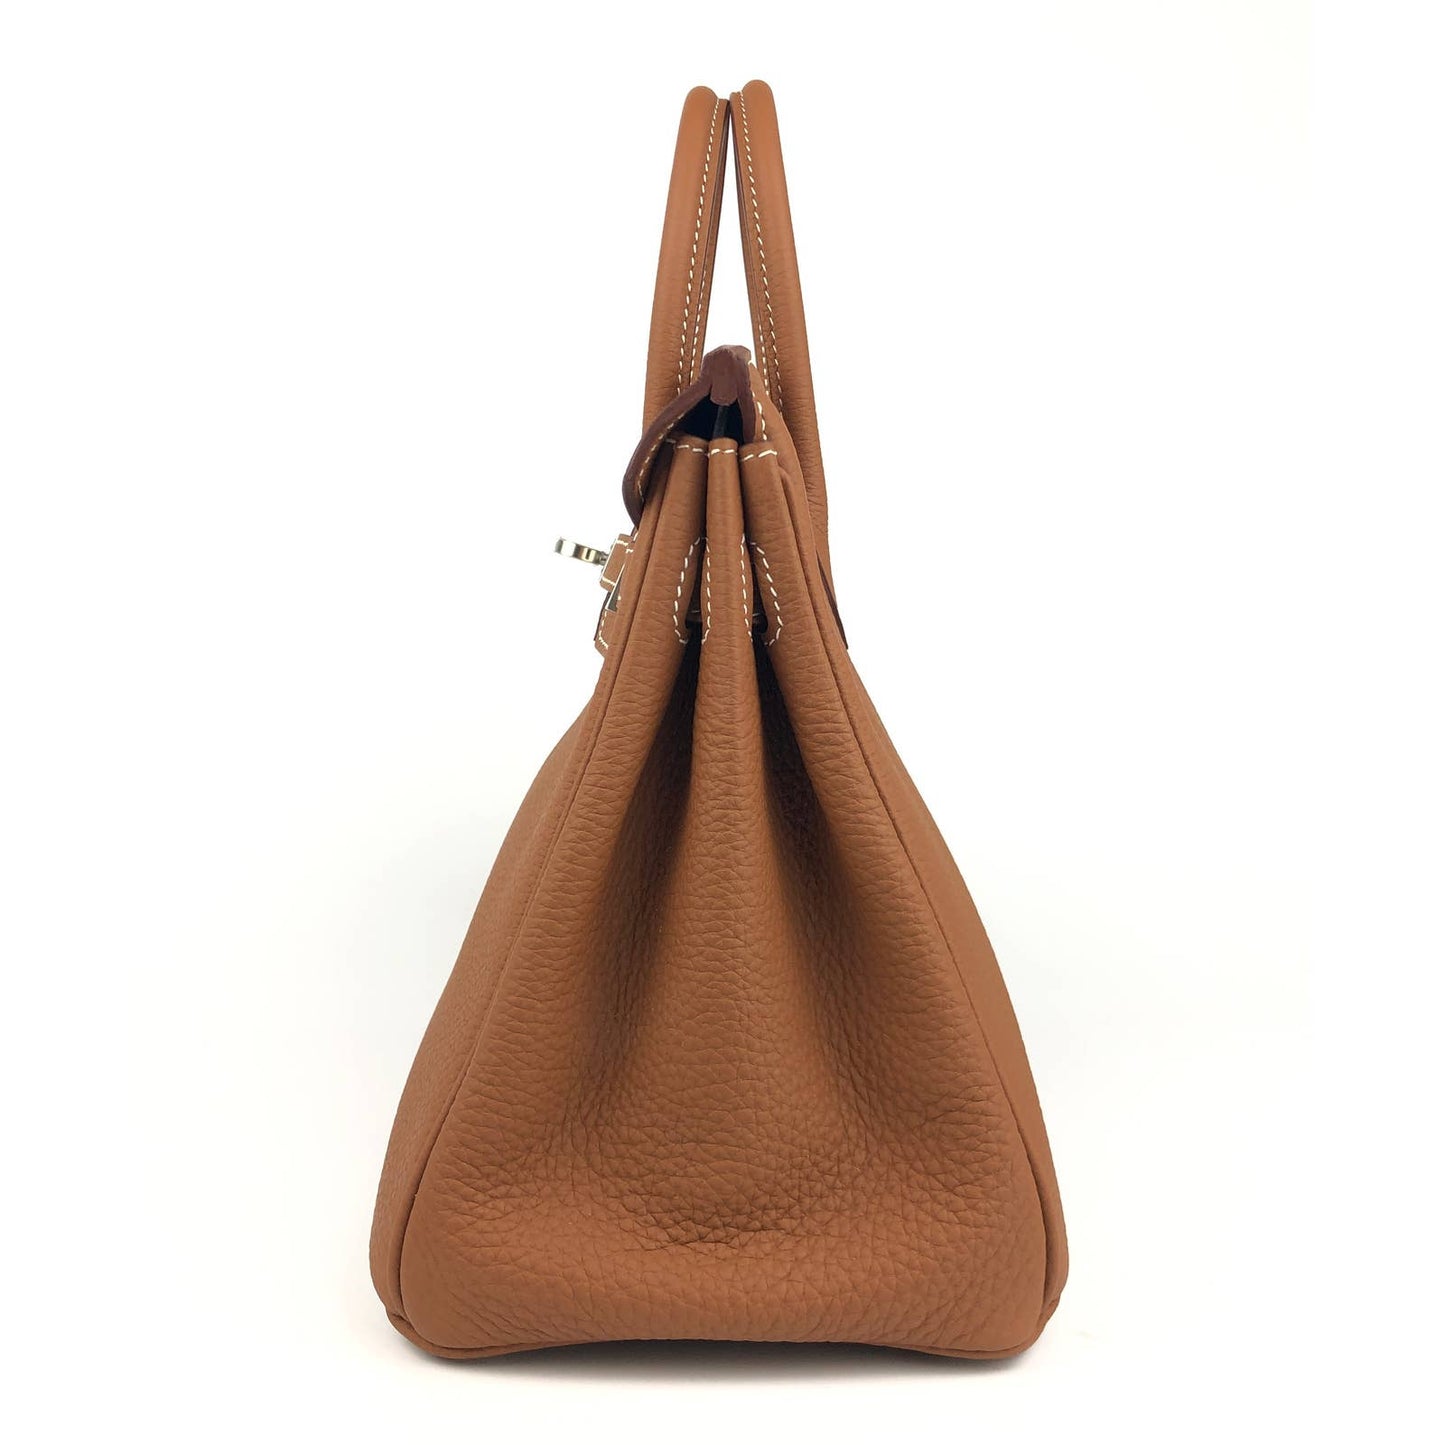 Hermes Birkin 25 Gold Tan Togo Leather Palladium Hardware 2021 Handbag Bag